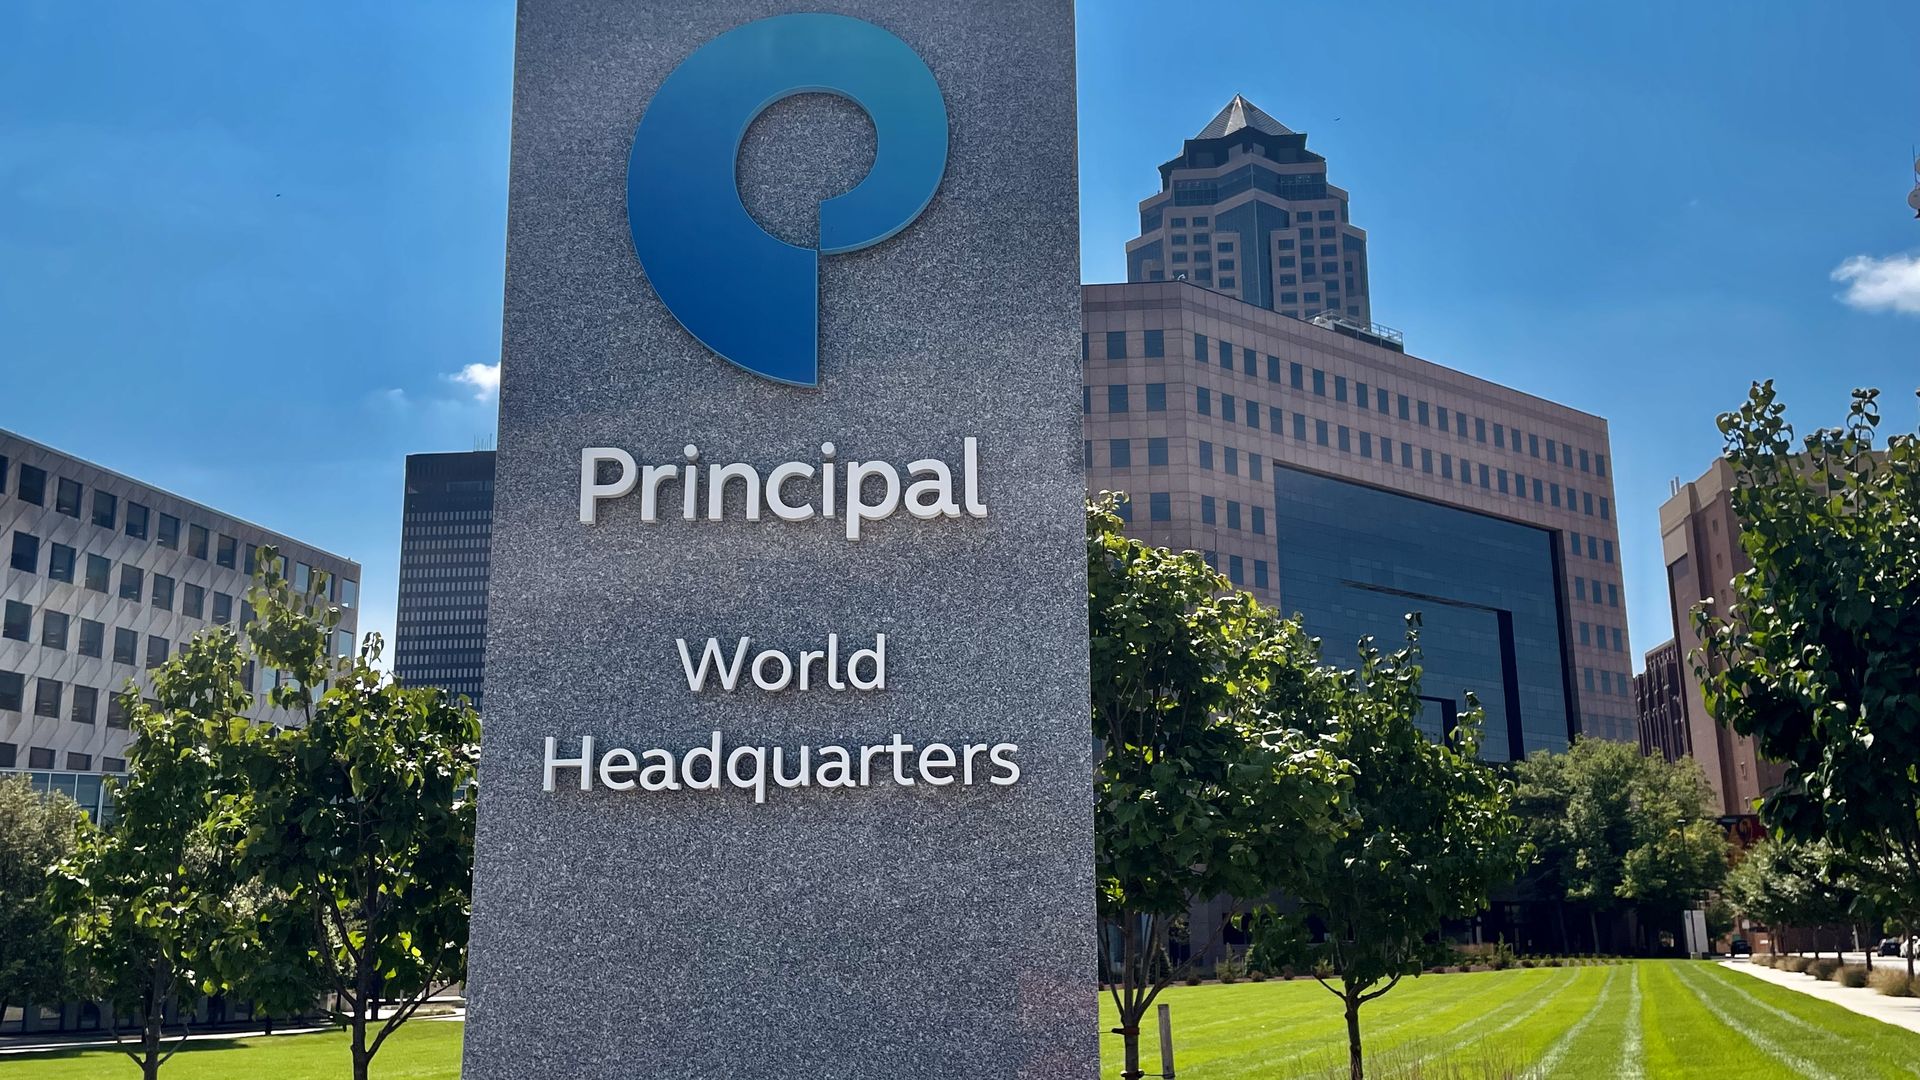 A photo of Principal's world headquarters sign.